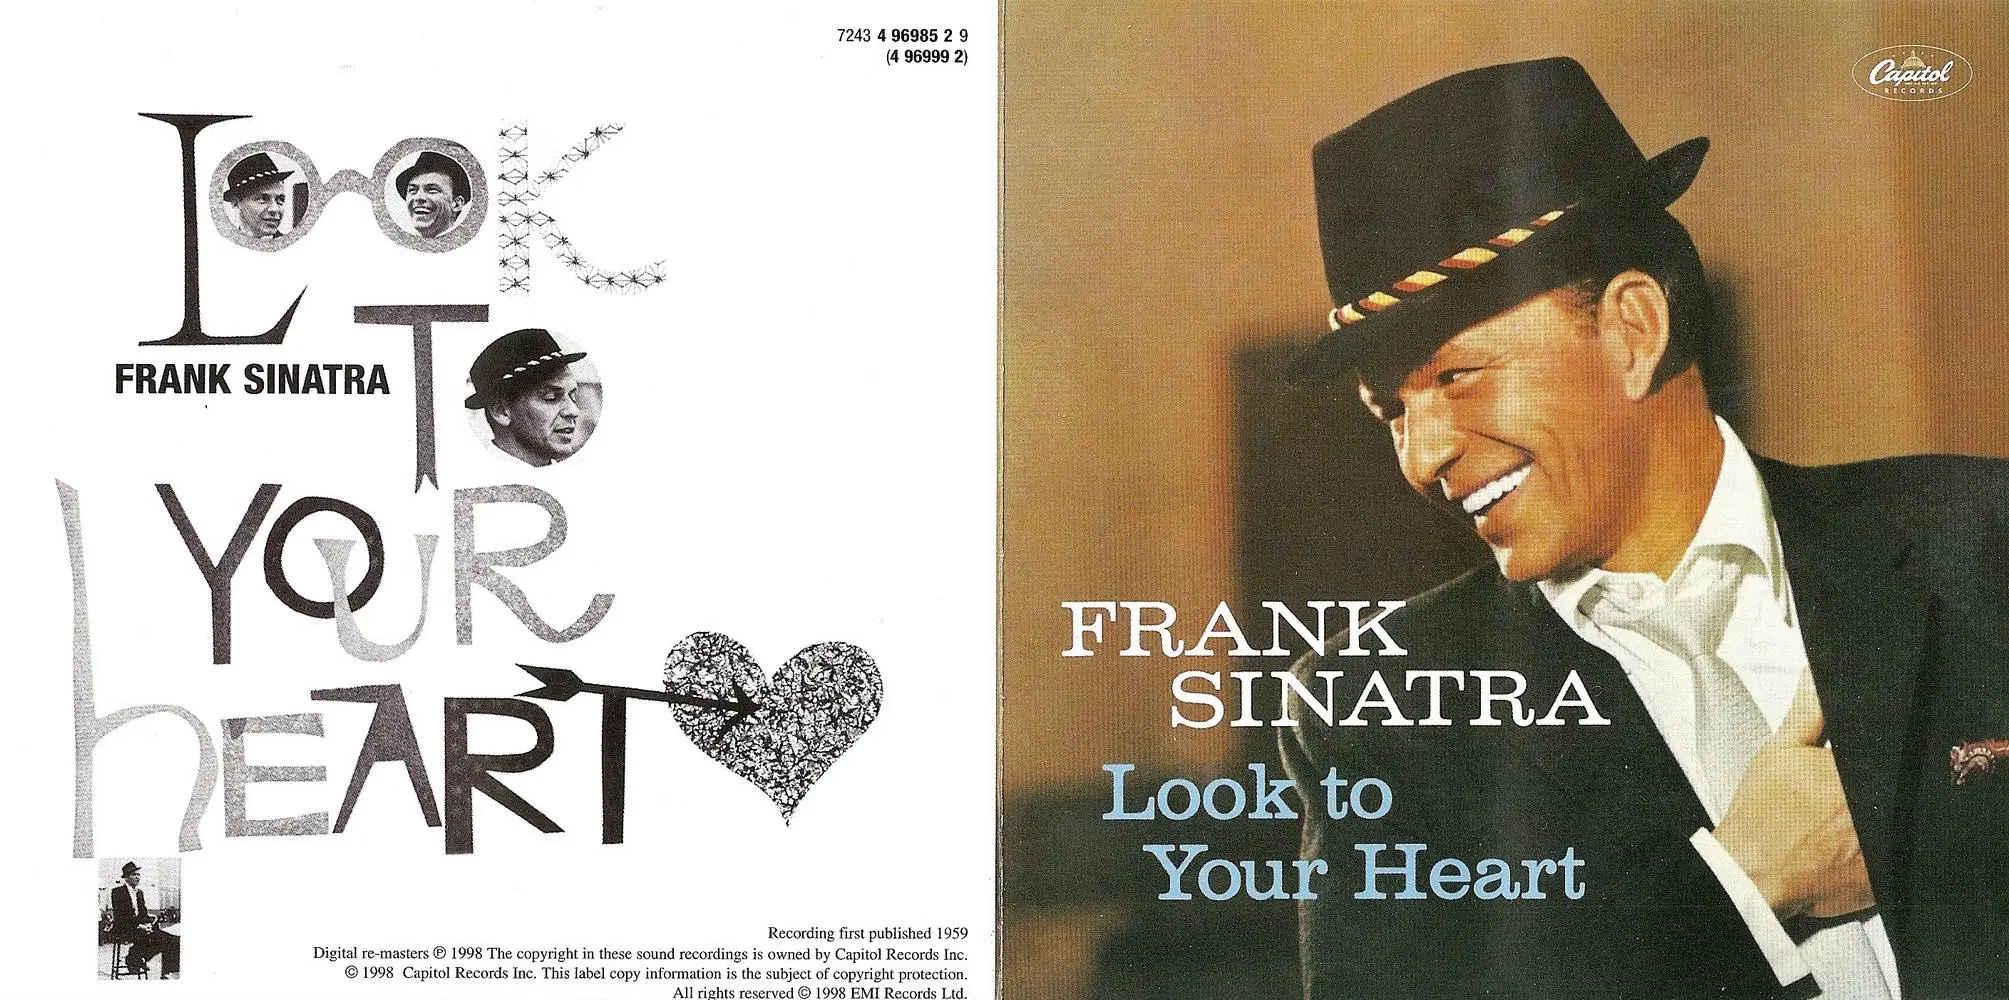 Фрэнк синатра love. Sinatra - Sinatra 1988 обложка. Фрэнк Синатра альбомы. Frank Sinatra look to your Heart. Frank Sinatra обложка альбома.